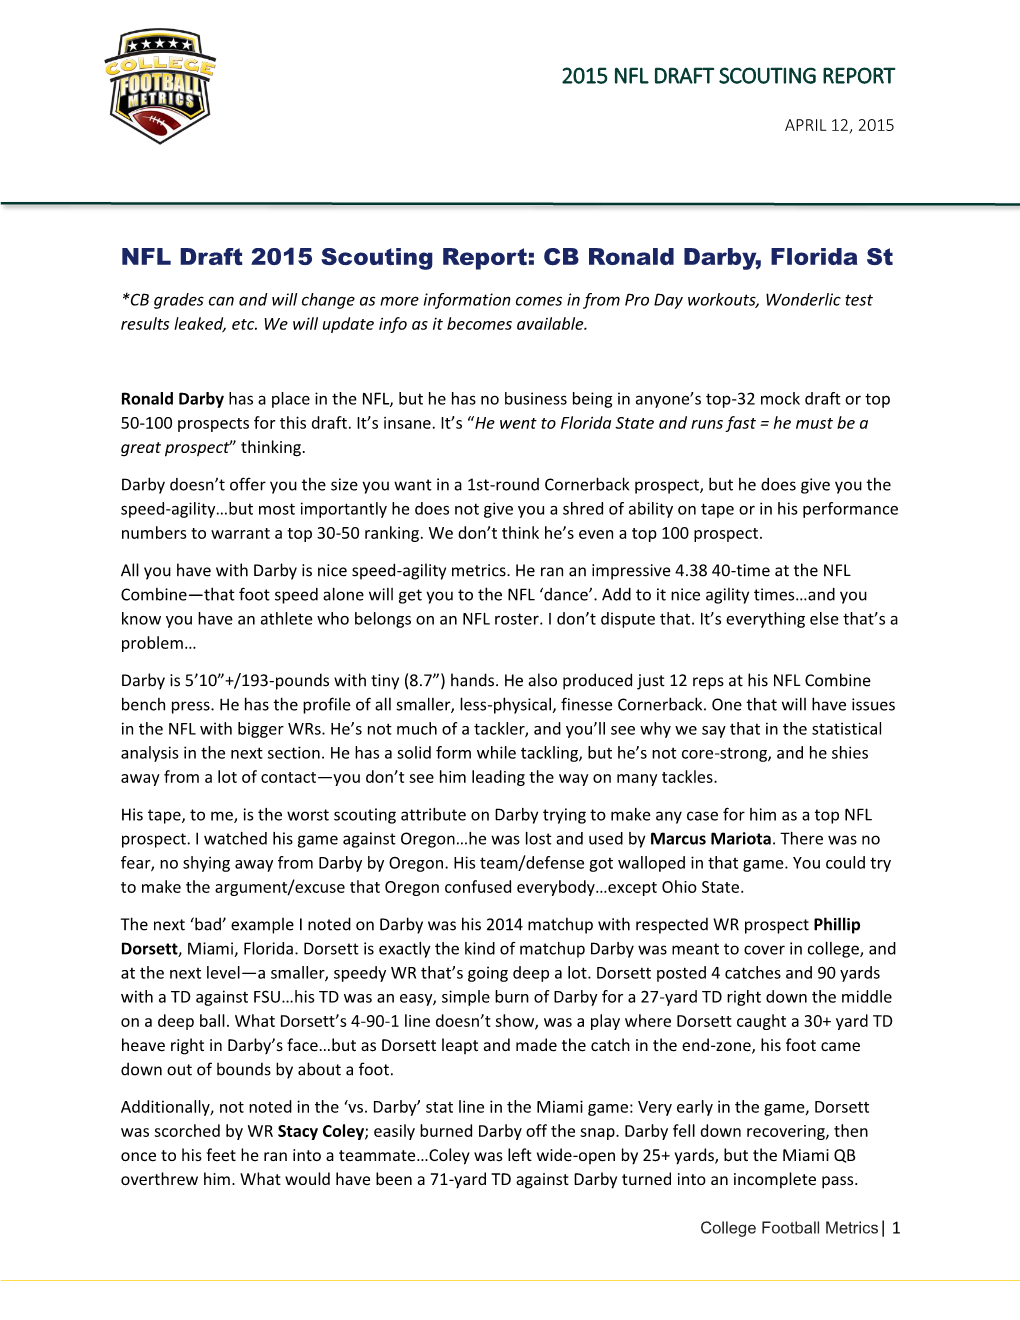 2015 NFL DRAFT SCOUTING REPORT NFL Draft 2015 Scouting Report: CB Ronald Darby, Florida St